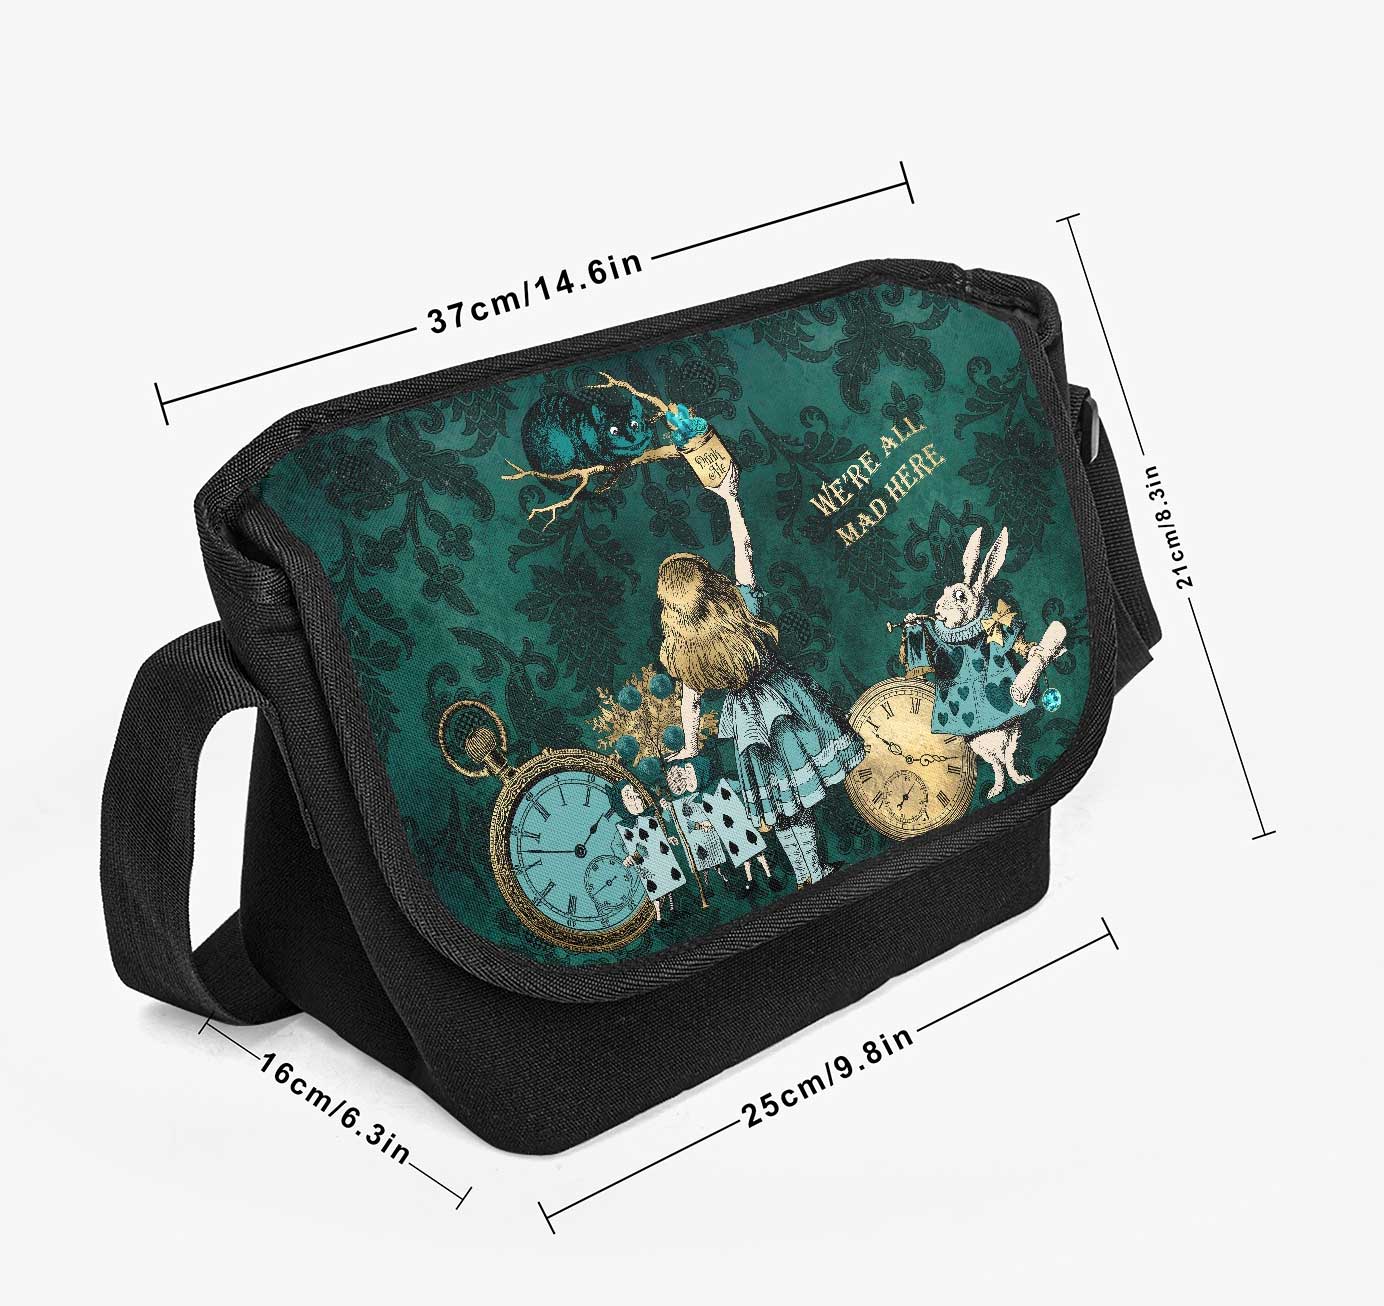 Alice in Wonderland Green Messenger Bag (JPGMB)